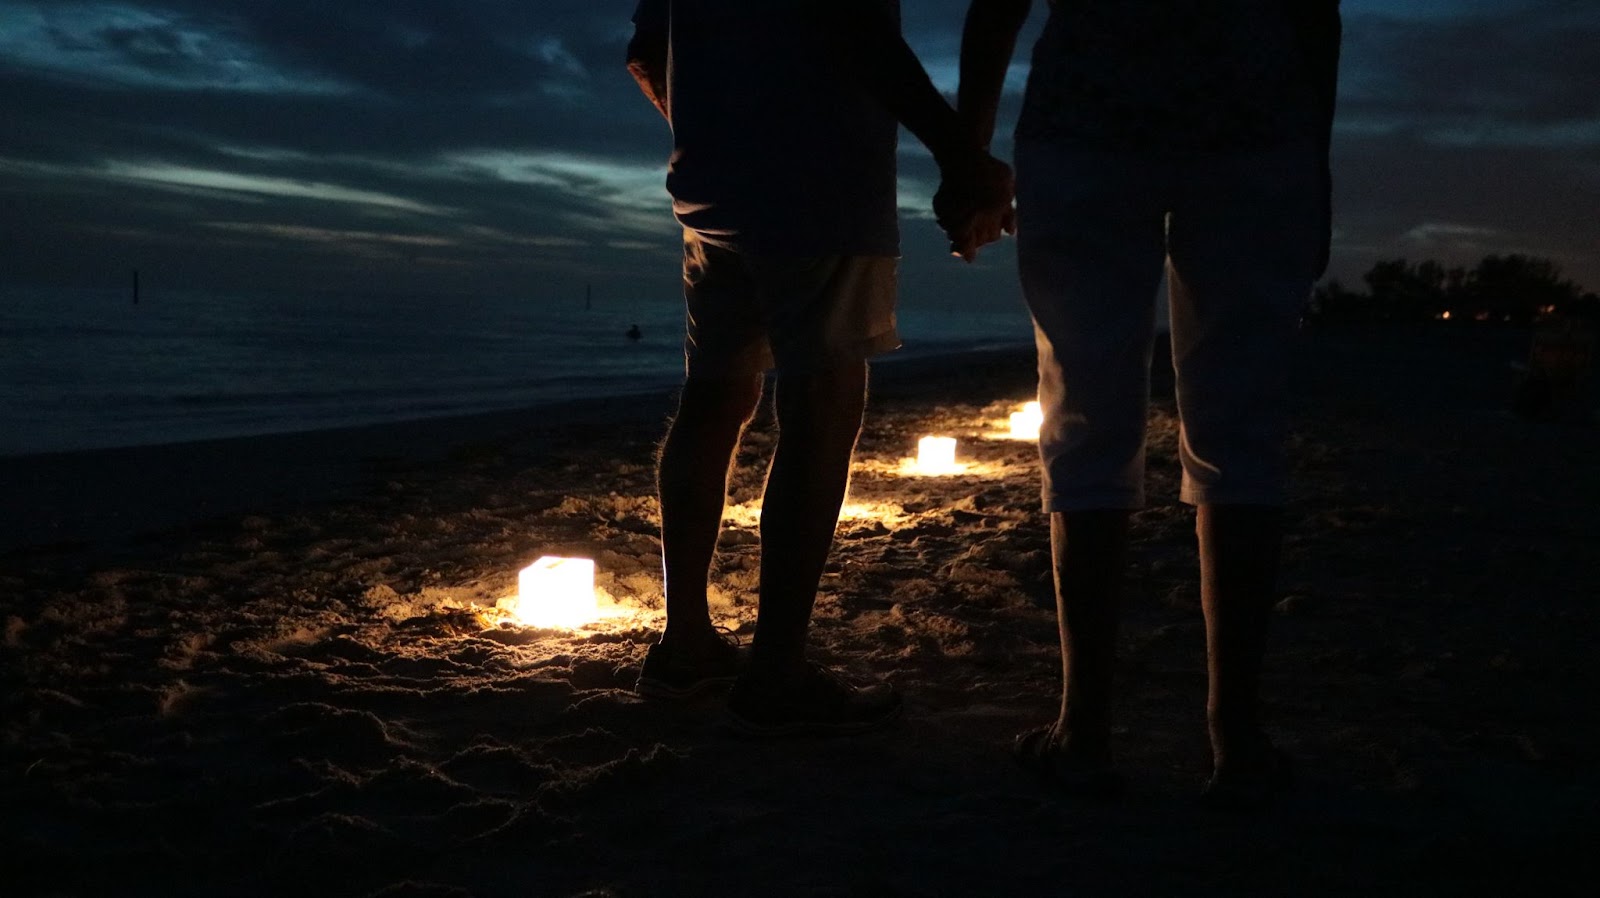 Beach Lanterns